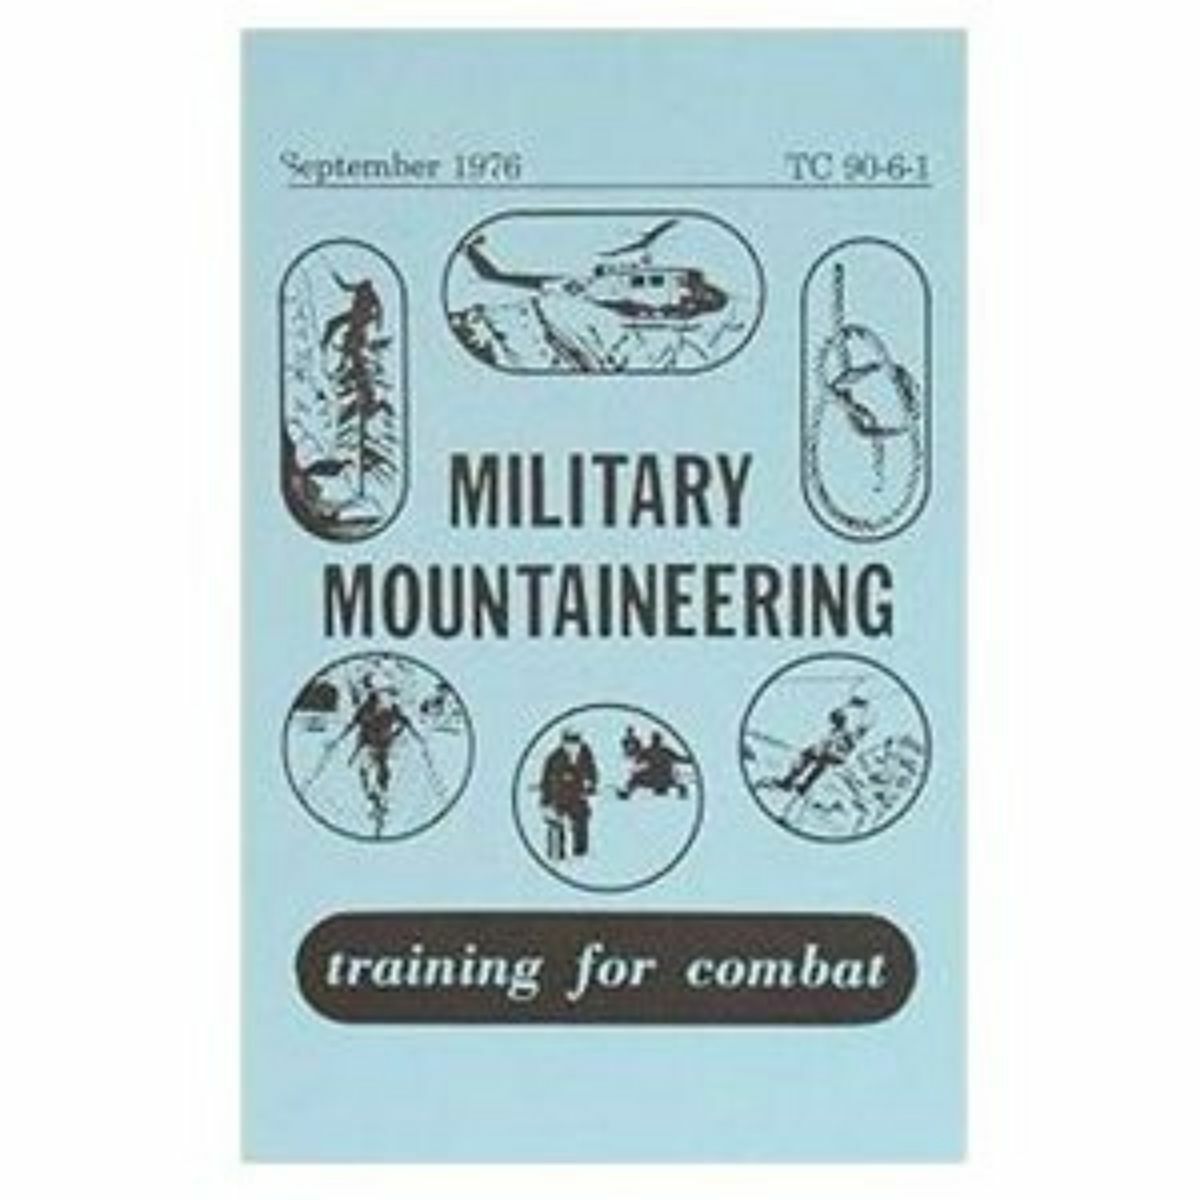 MILITARY MOUNTAINEERING BOOK TRAINING HANDBOOK U.S. Army Combat Training Guide